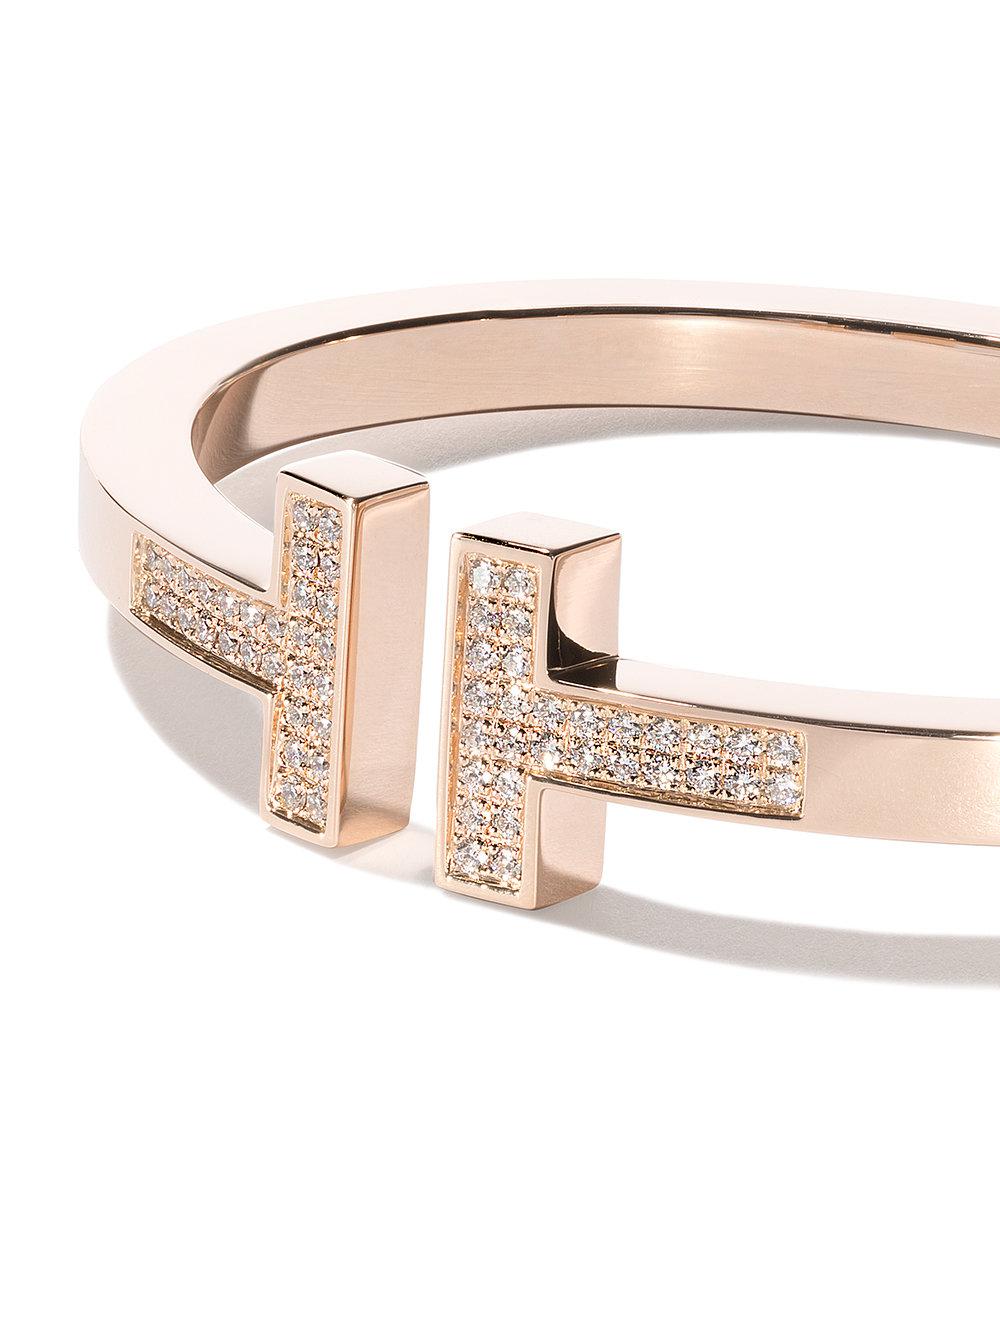 Lyst - Tiffany & Co 18kt Rose Gold Tiffany T Square Diamond Cuff in ...